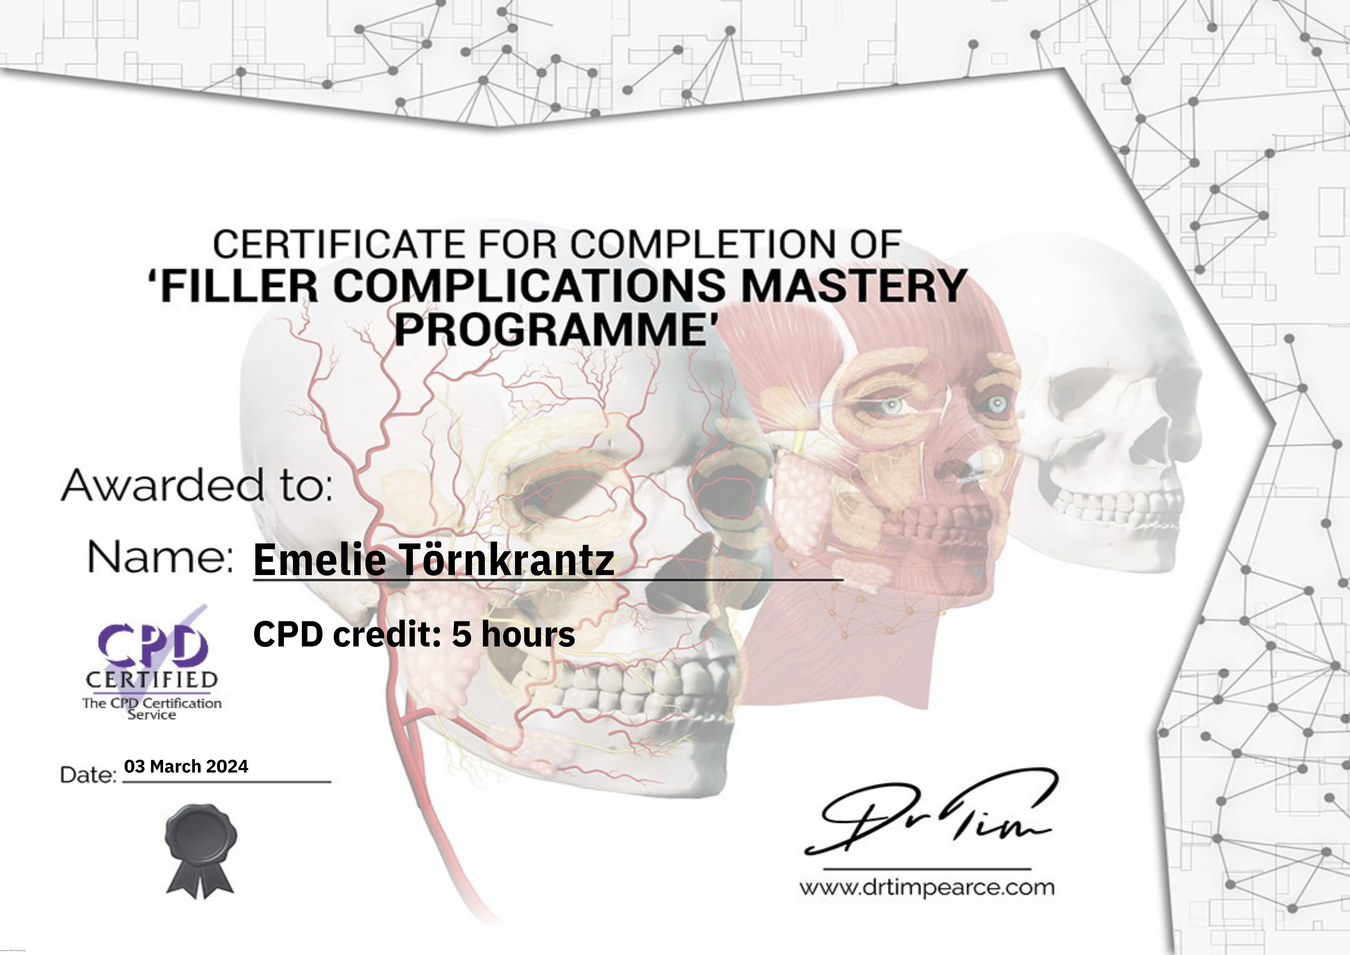 Certifikat "Filler complication mastery programme"